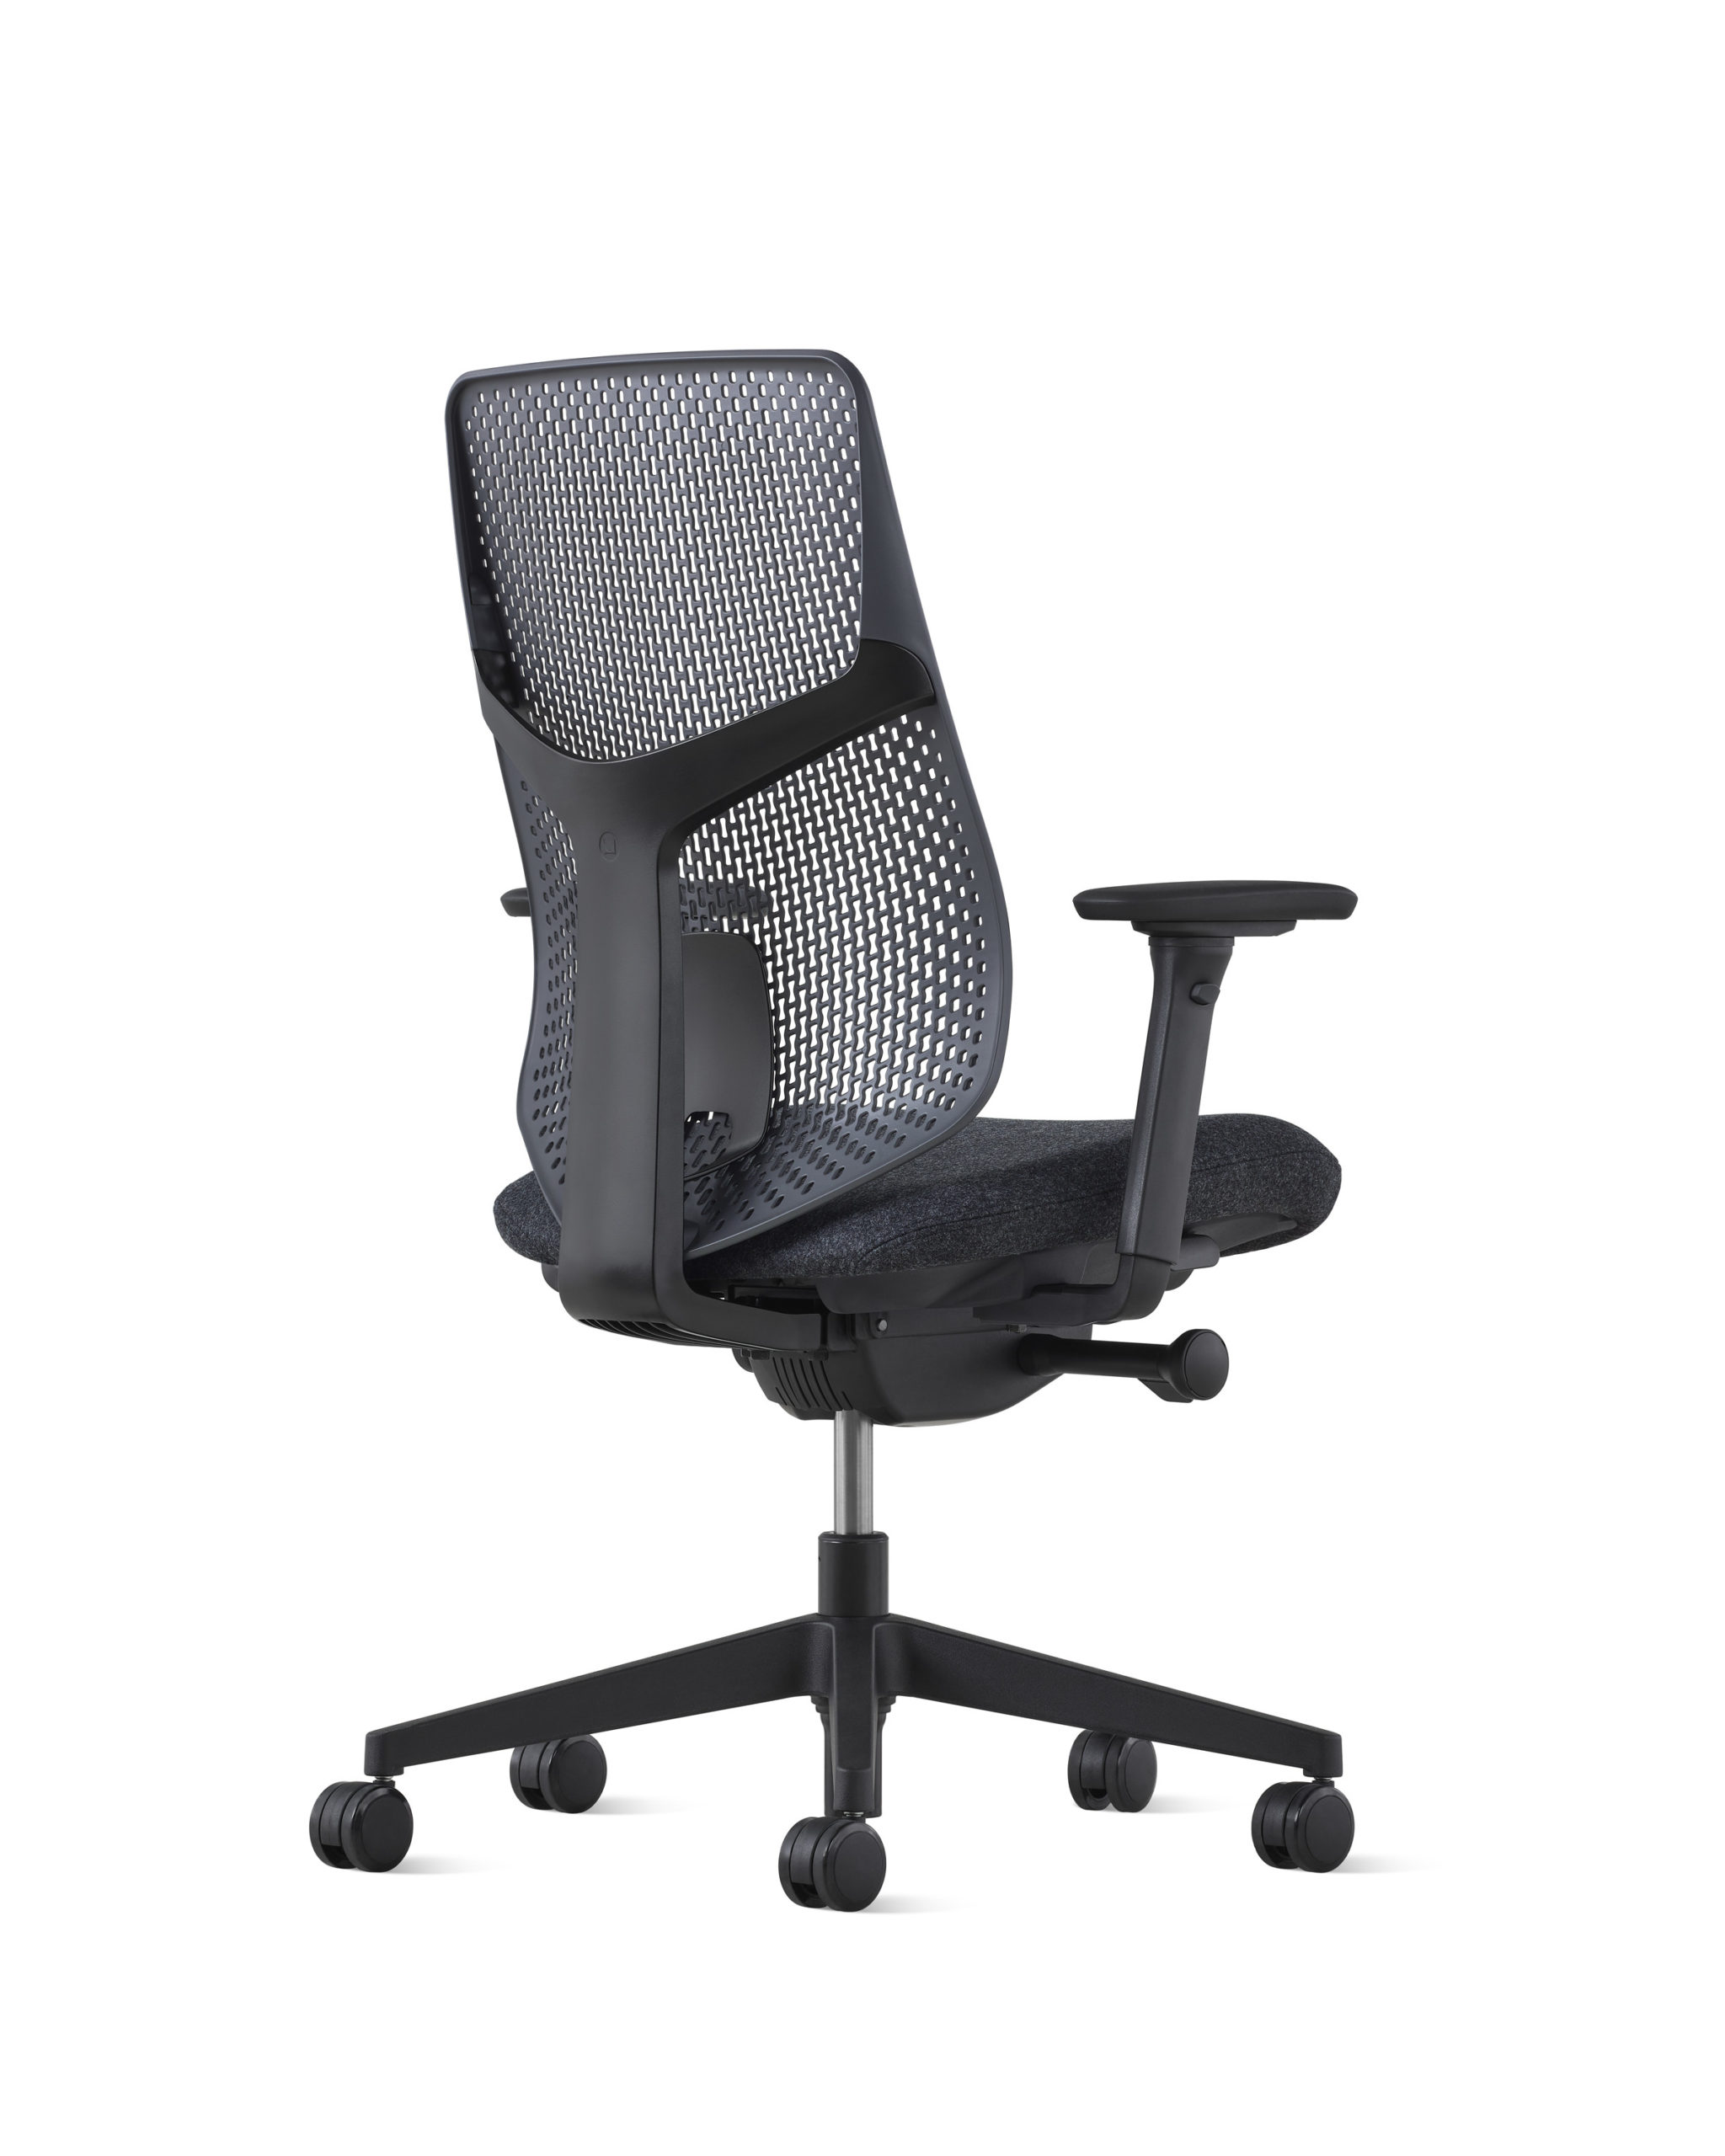 Verus Herman Miller silla ergonomica respaldo rigido